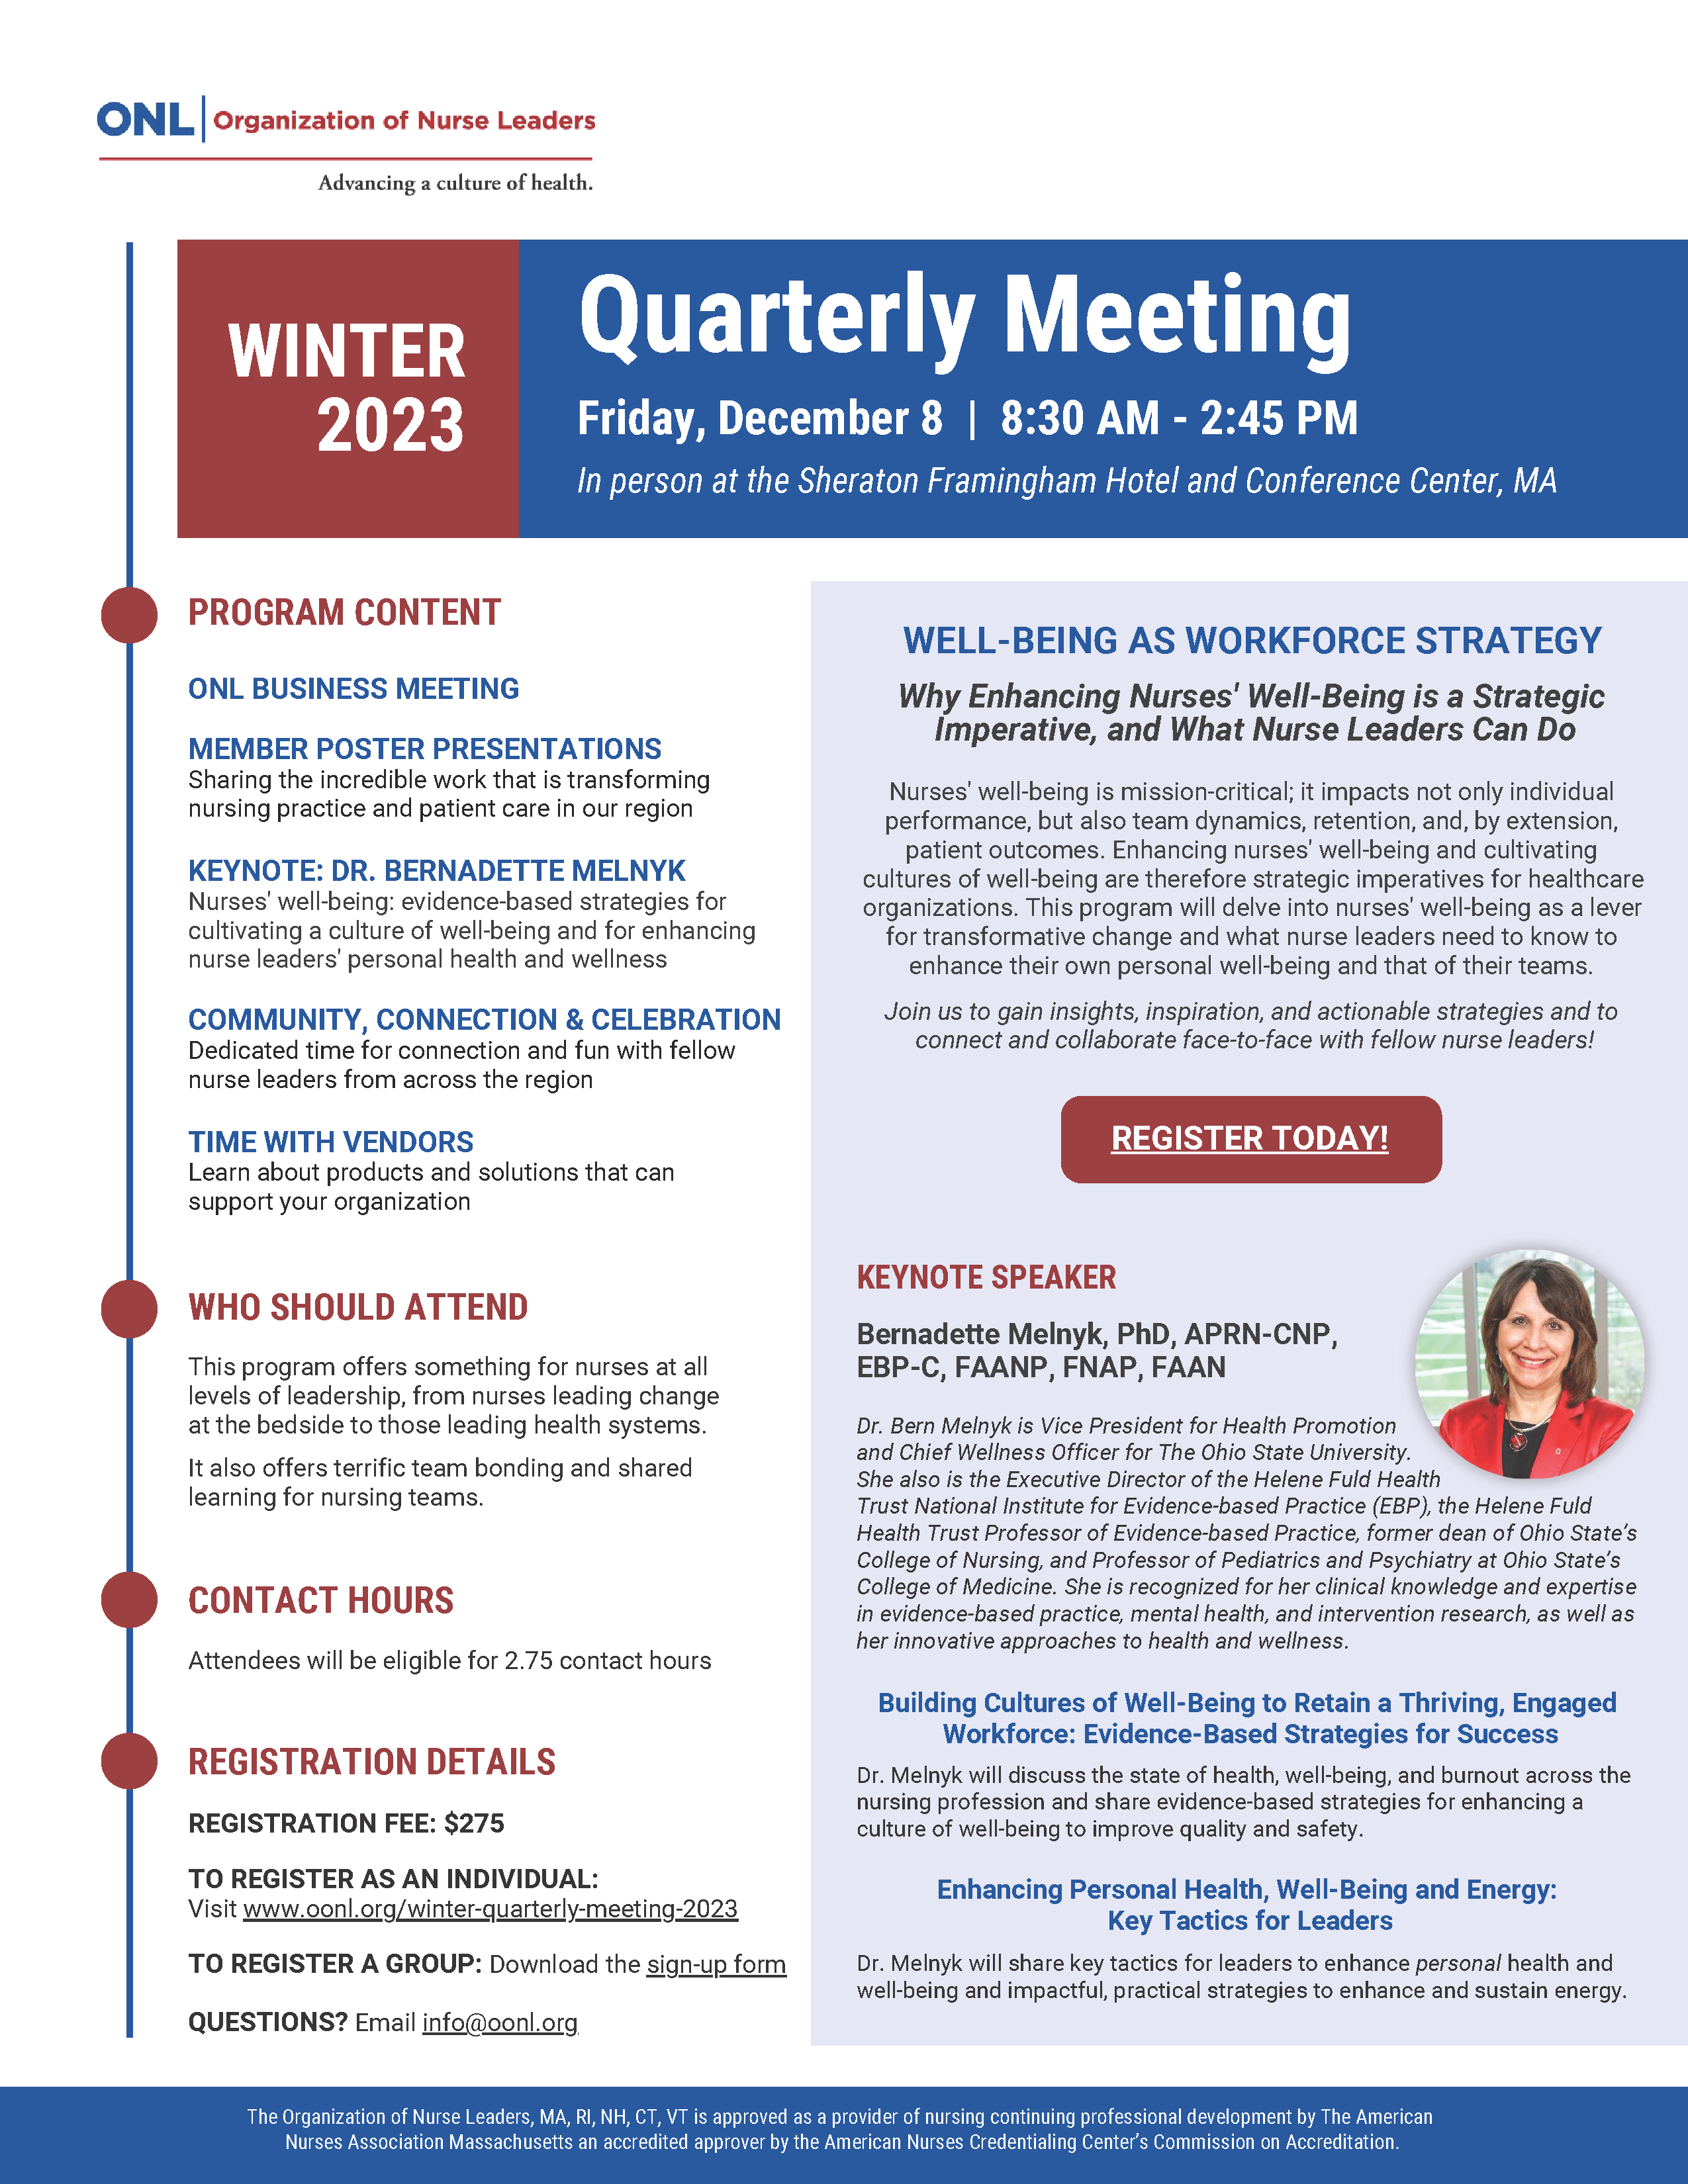 Winter 2023 Quarterly Meeting Flyer